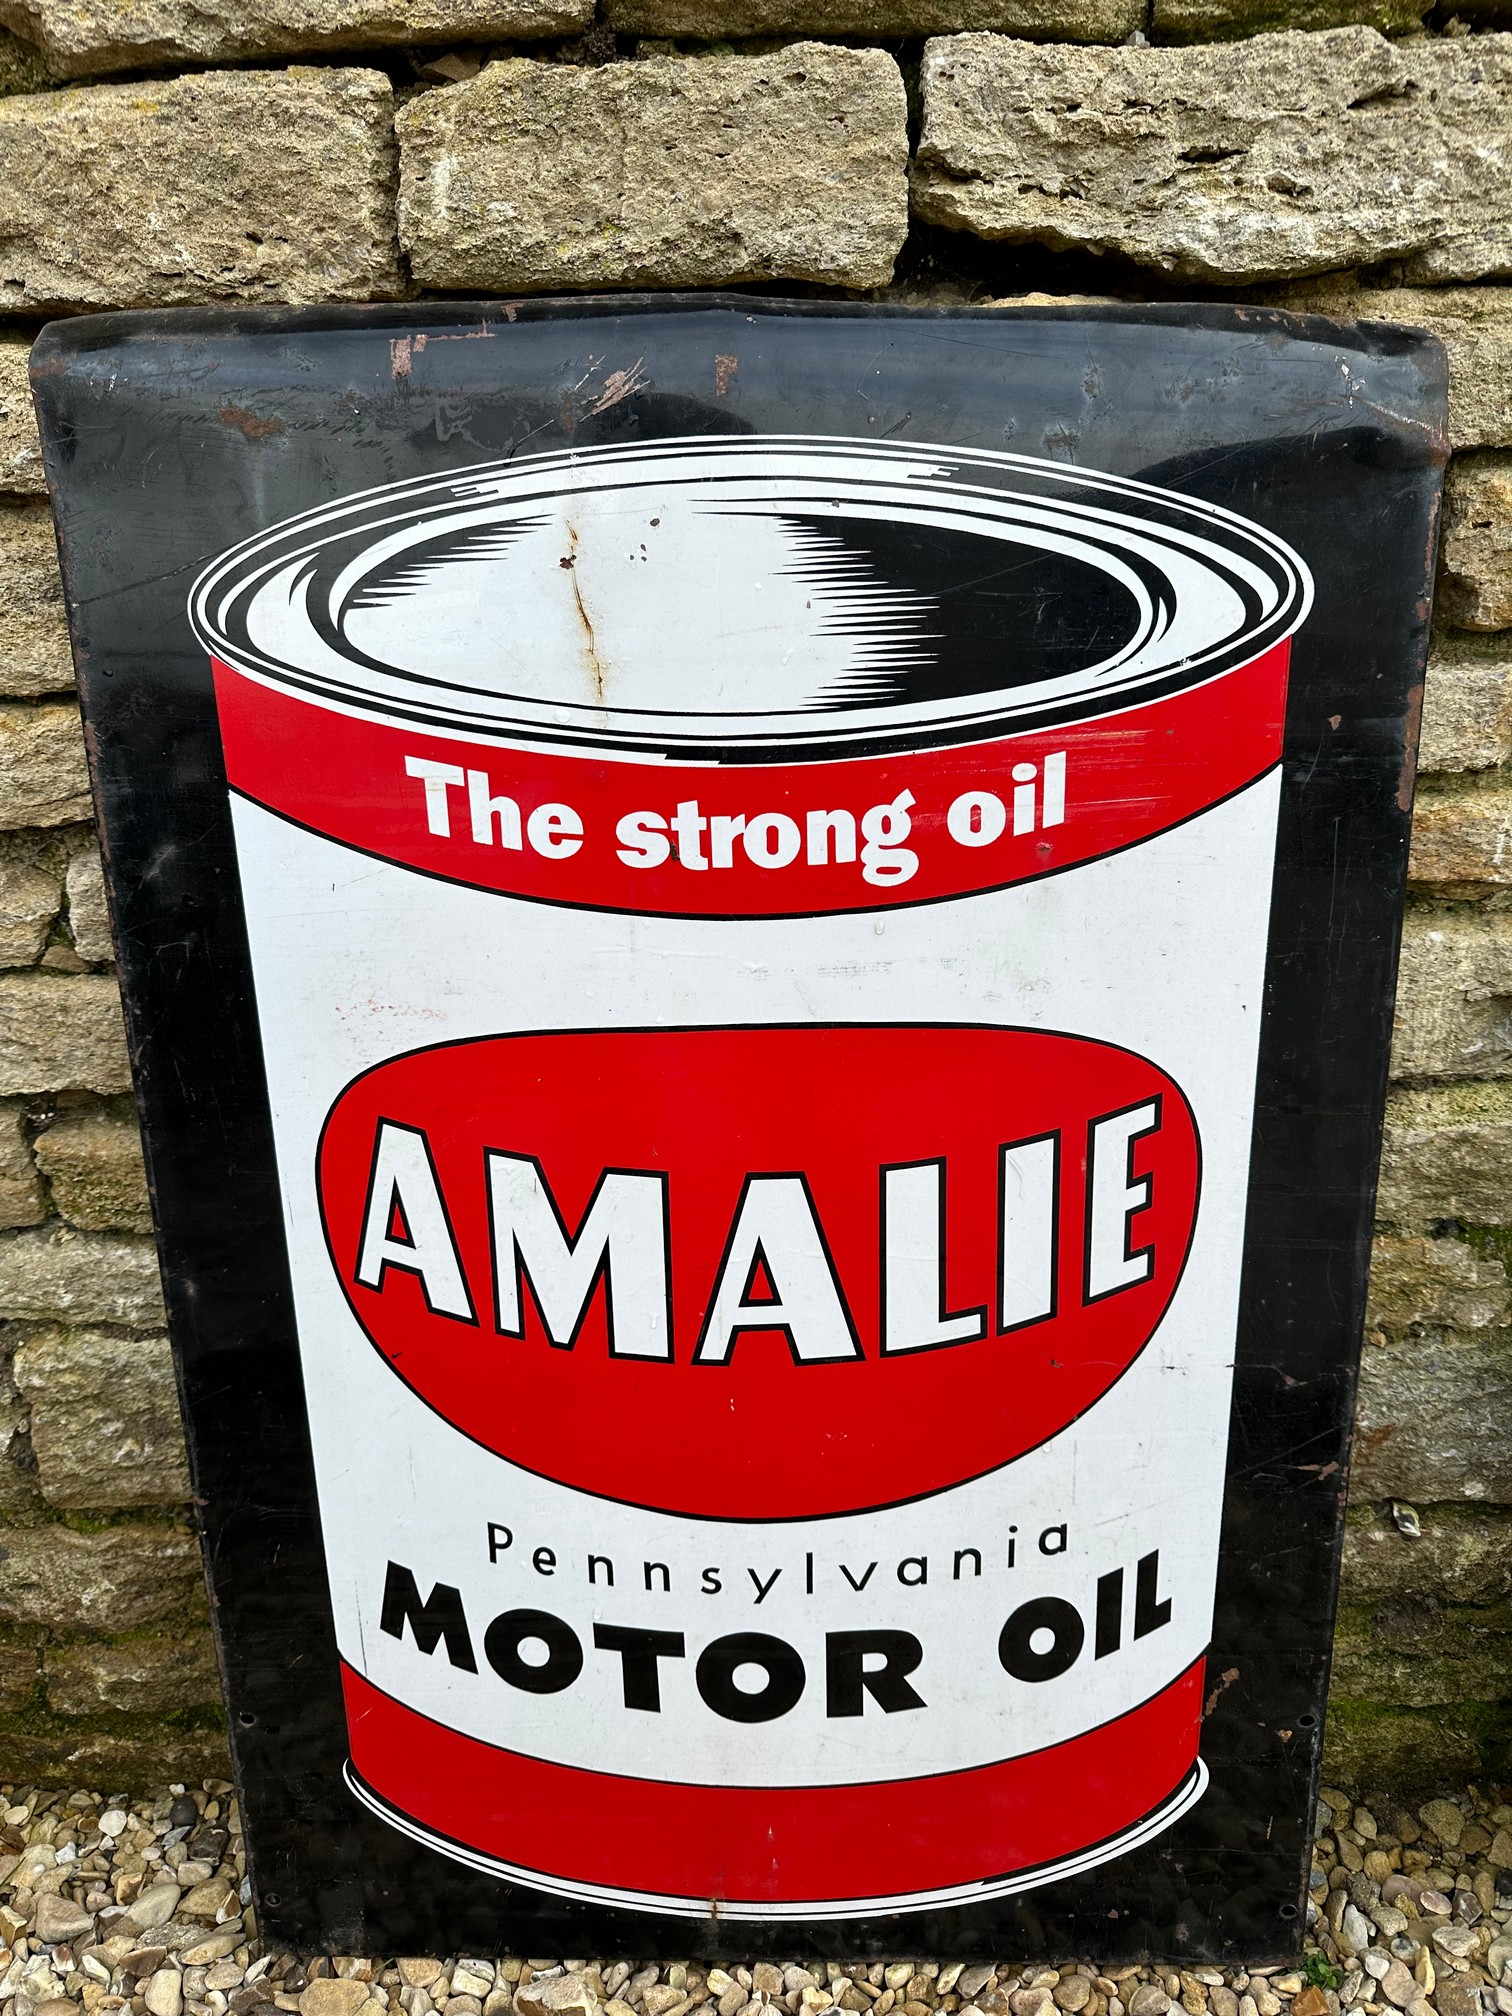 An Amalie Pennsylvania Motor Oil rectangular advertising sign, 24 x 35".